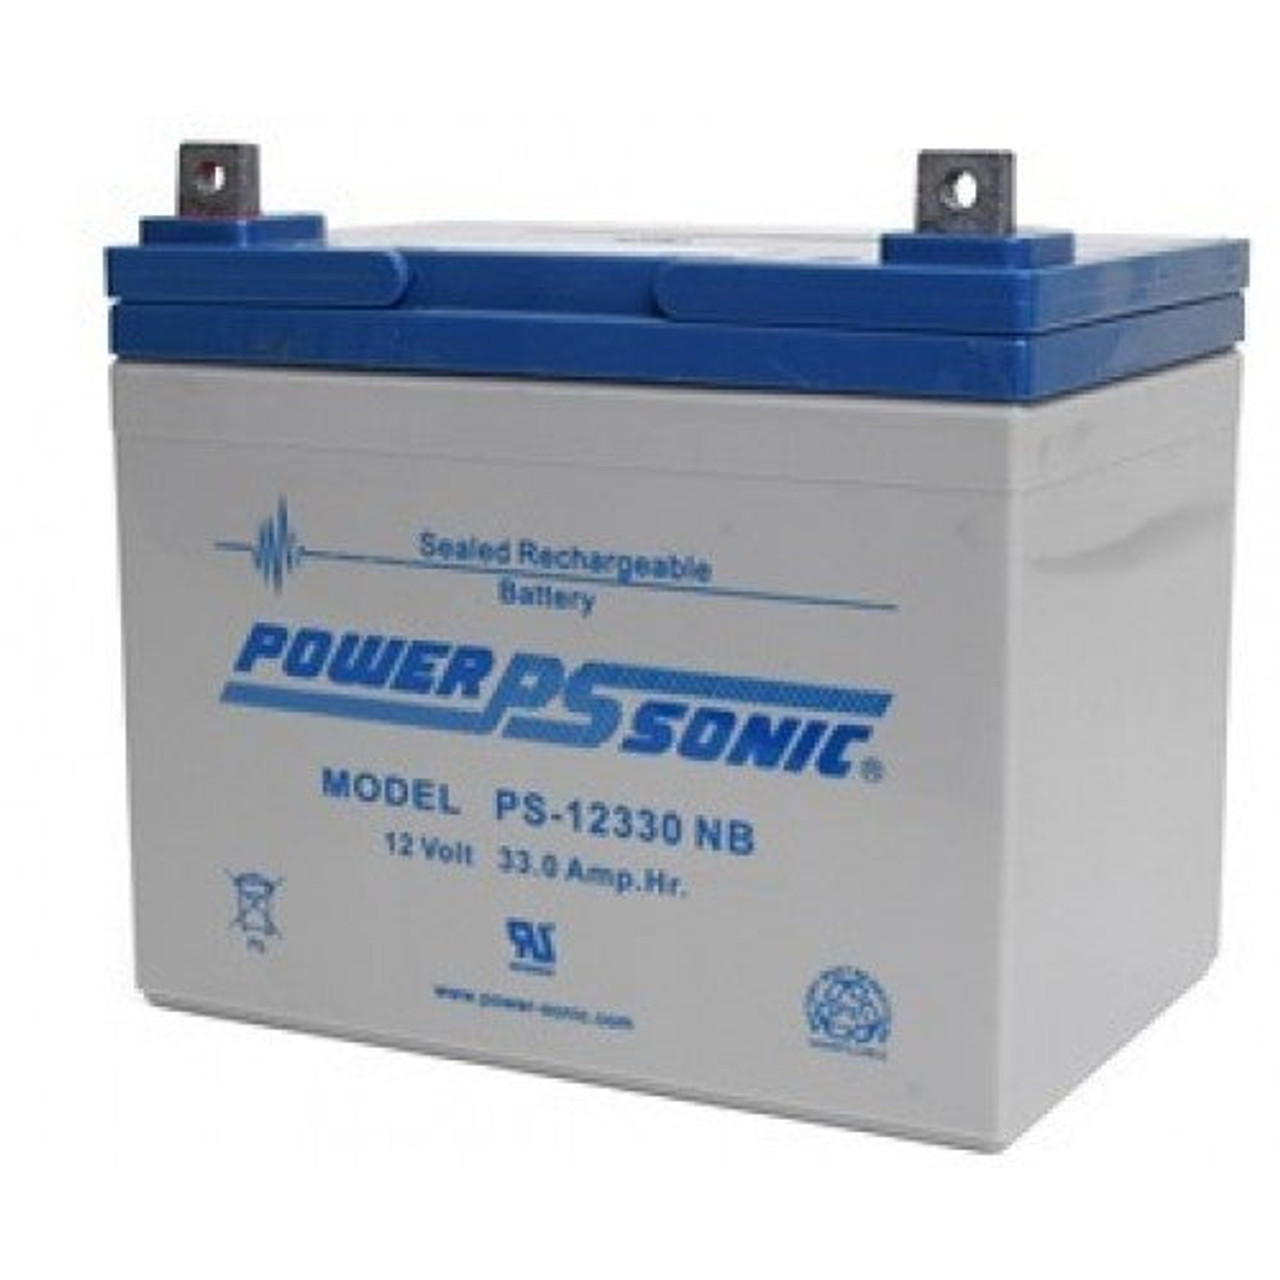 PS-12330 - PowerSonic 12volt - 33Ah - Sealed Lead Acid Rechargeable  Battery (Nut & Bolt)